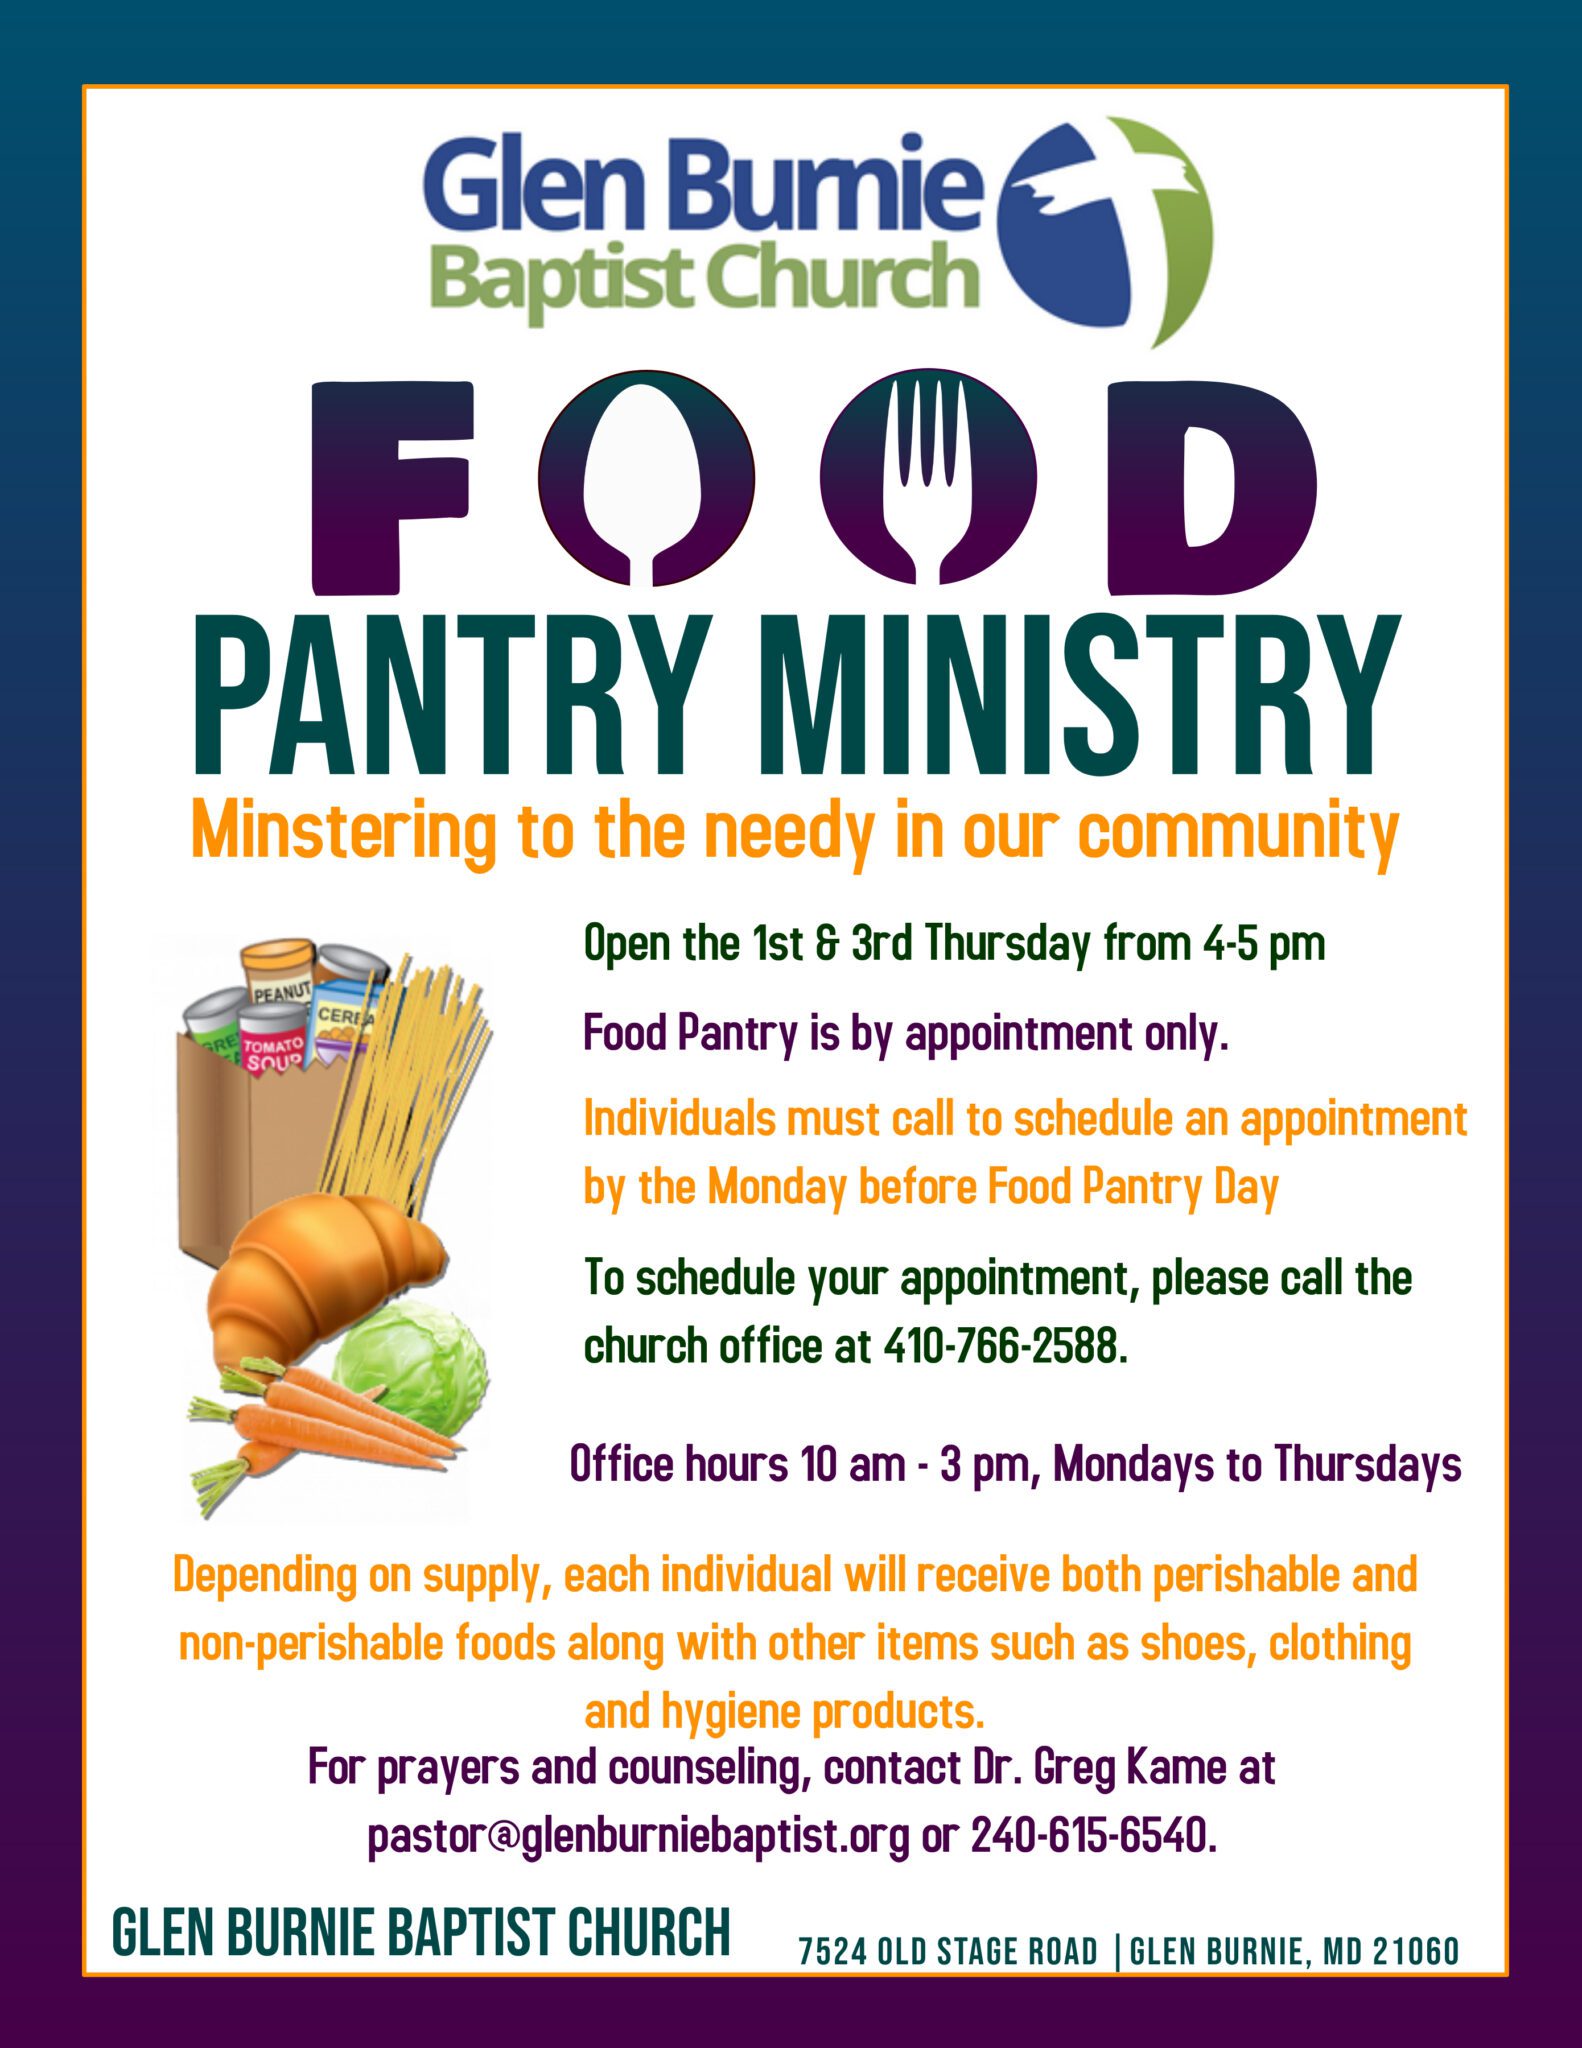 food-pantry-ministry-glen-burnie-baptist-church